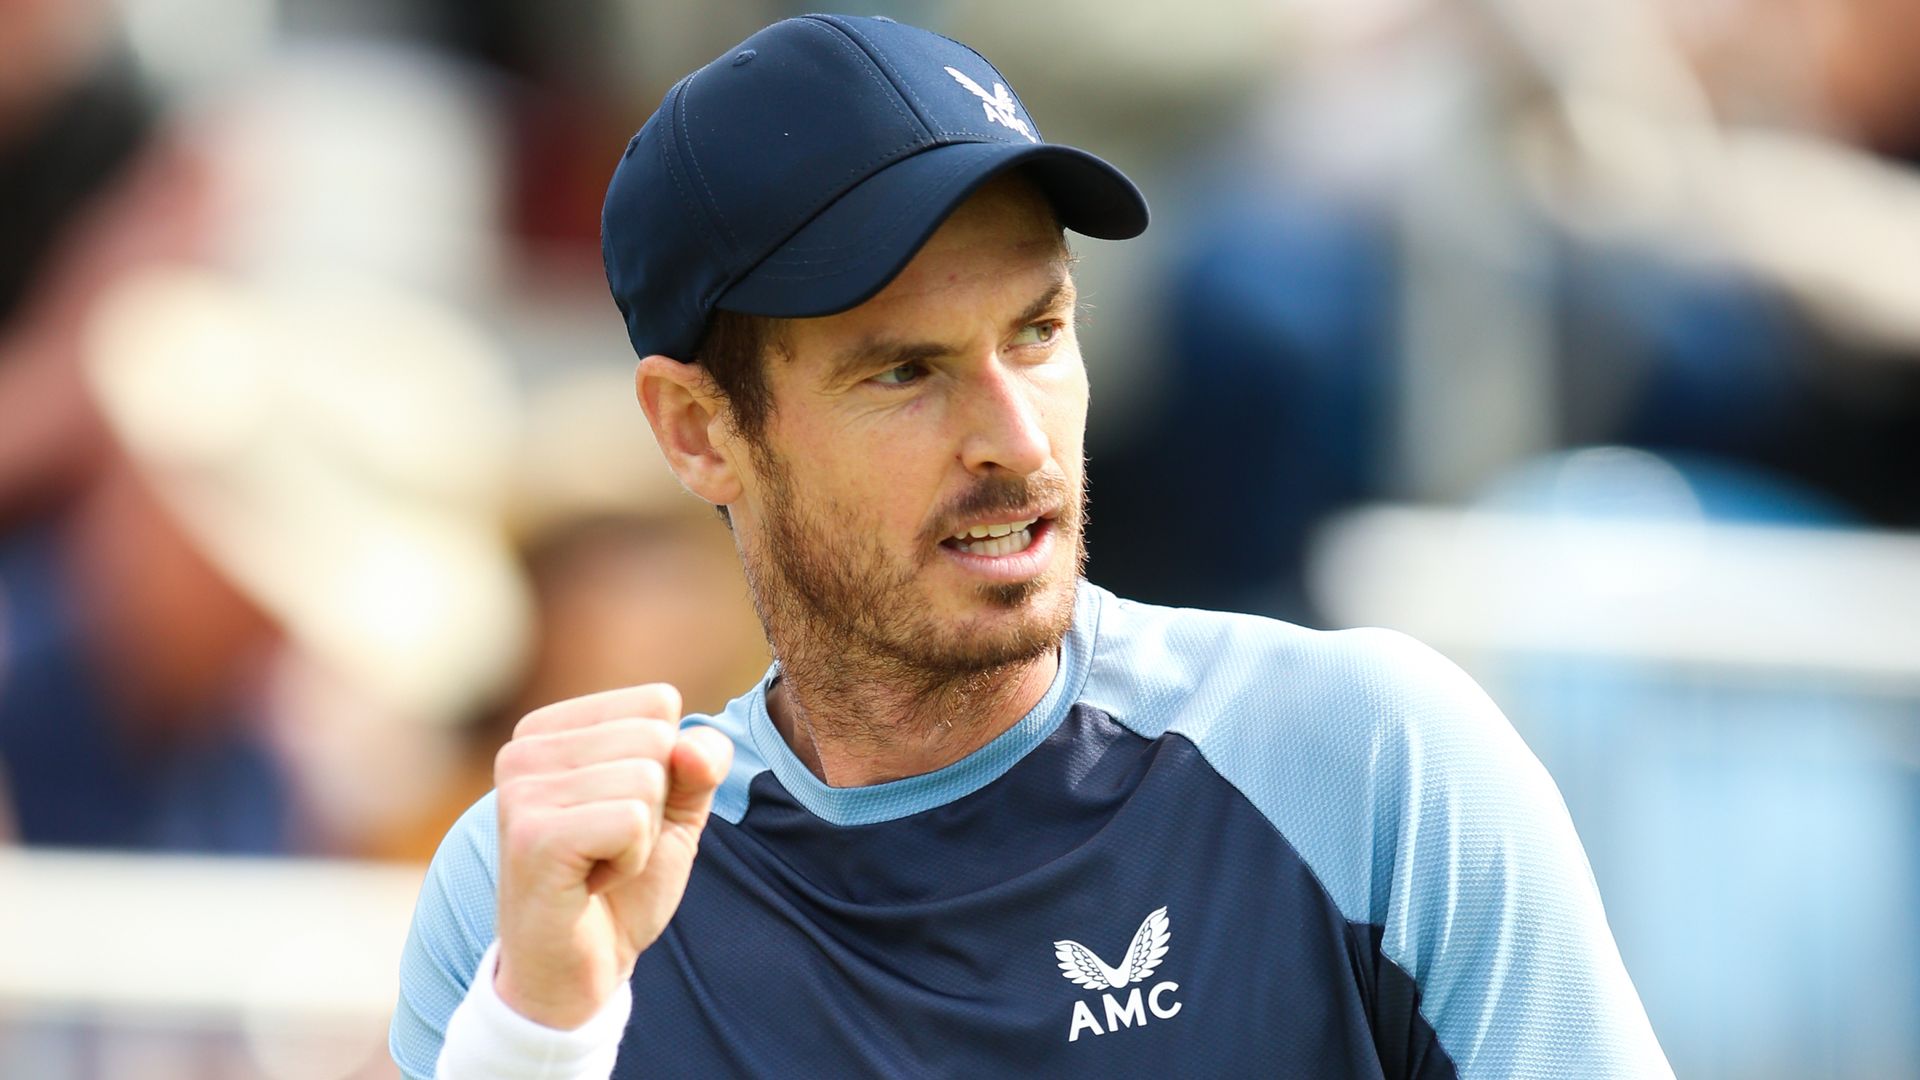 Andy Murray memulai kemenangan di Gijon Open perdana di Spanyol dengan kemenangan atas Alejandro Davidovich Fokina |  Berita Tenis